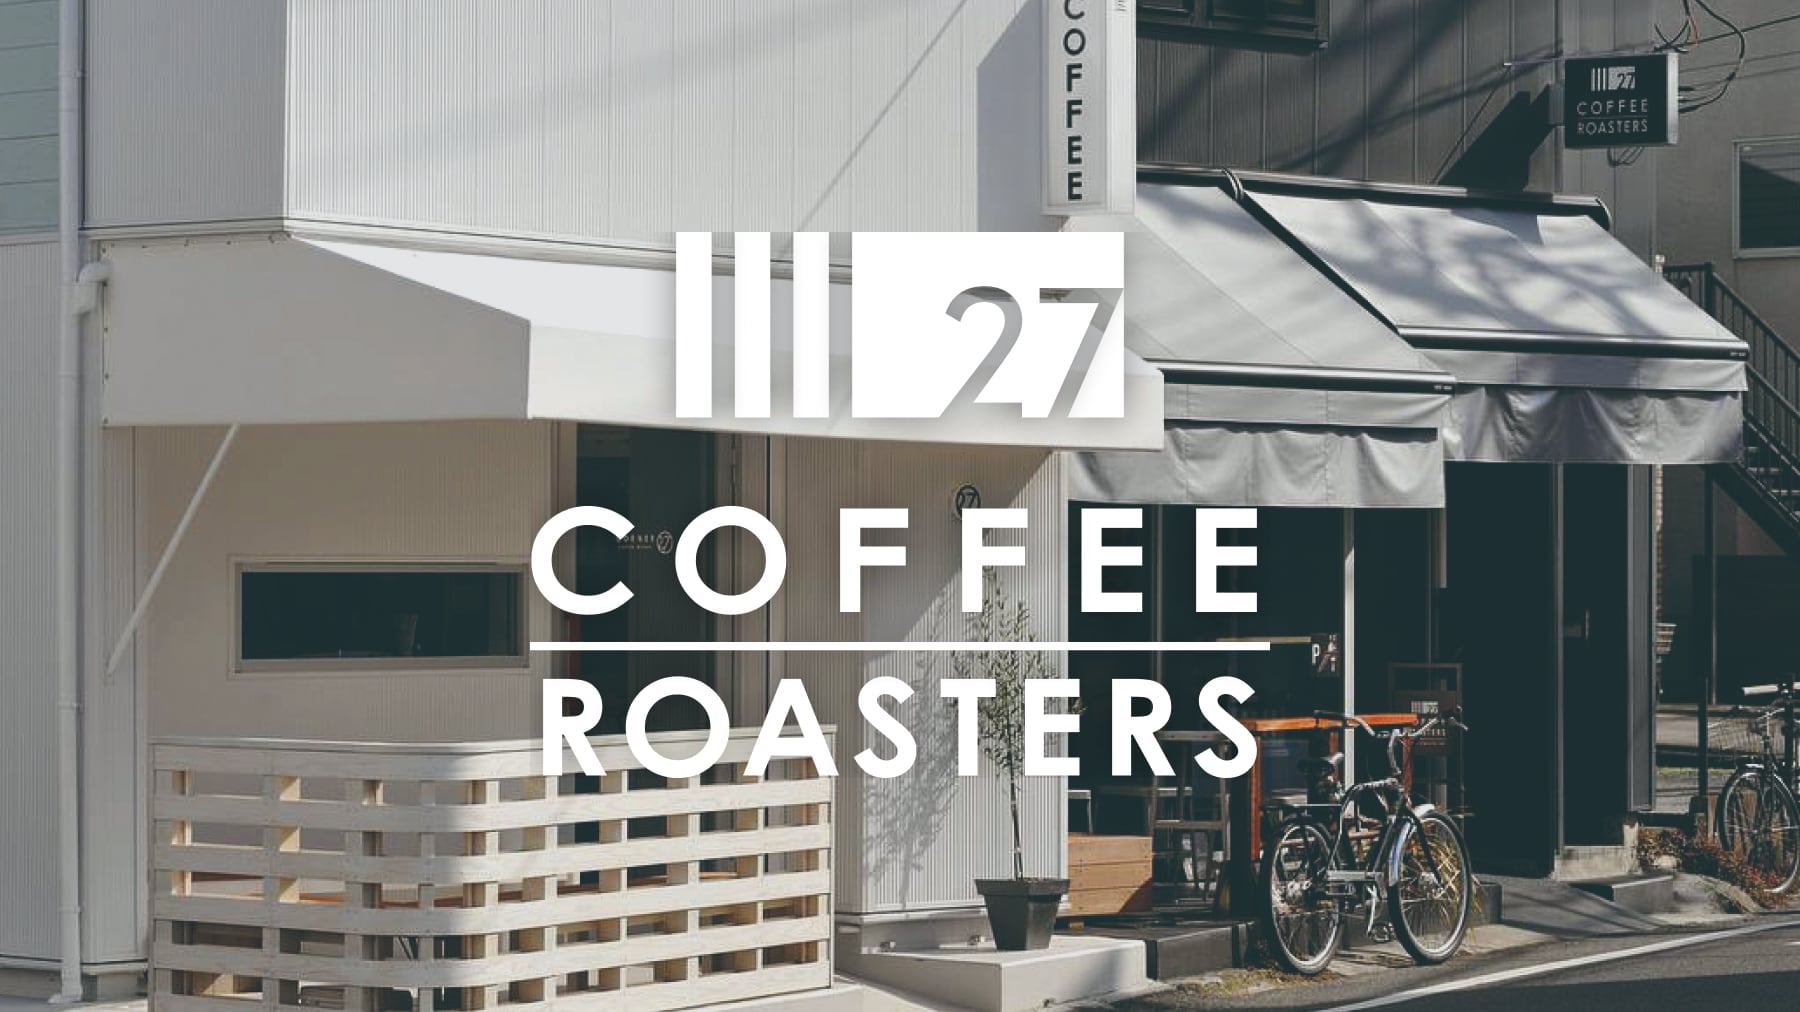 /partners/27coffeeroasters